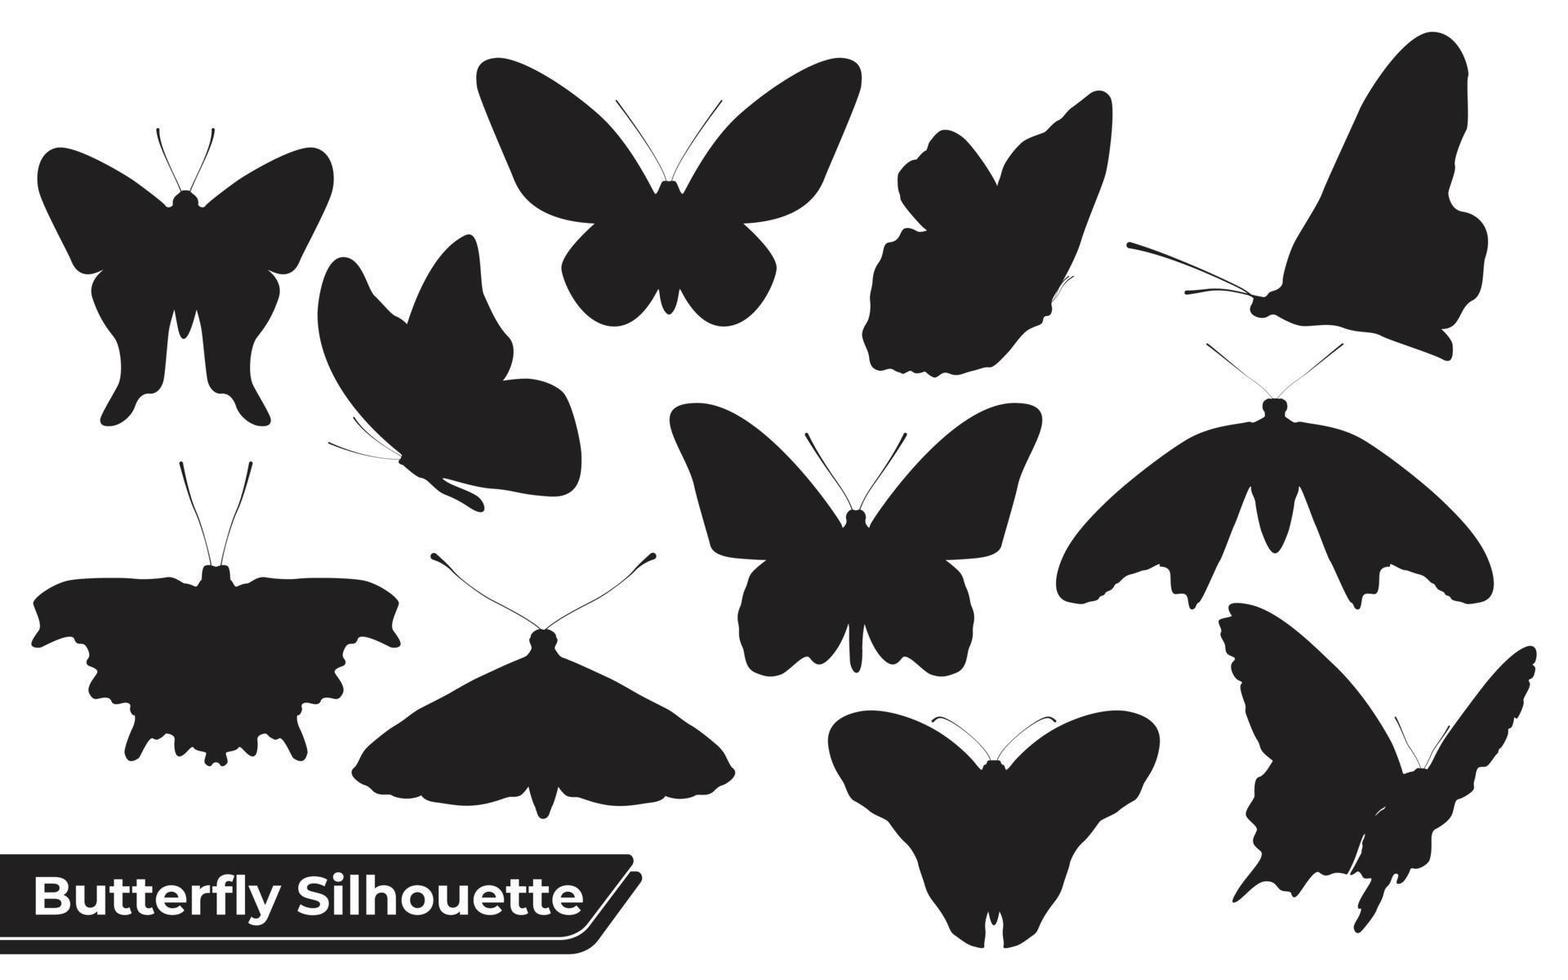 colección de siluetas de mariposas en diferentes poses vector